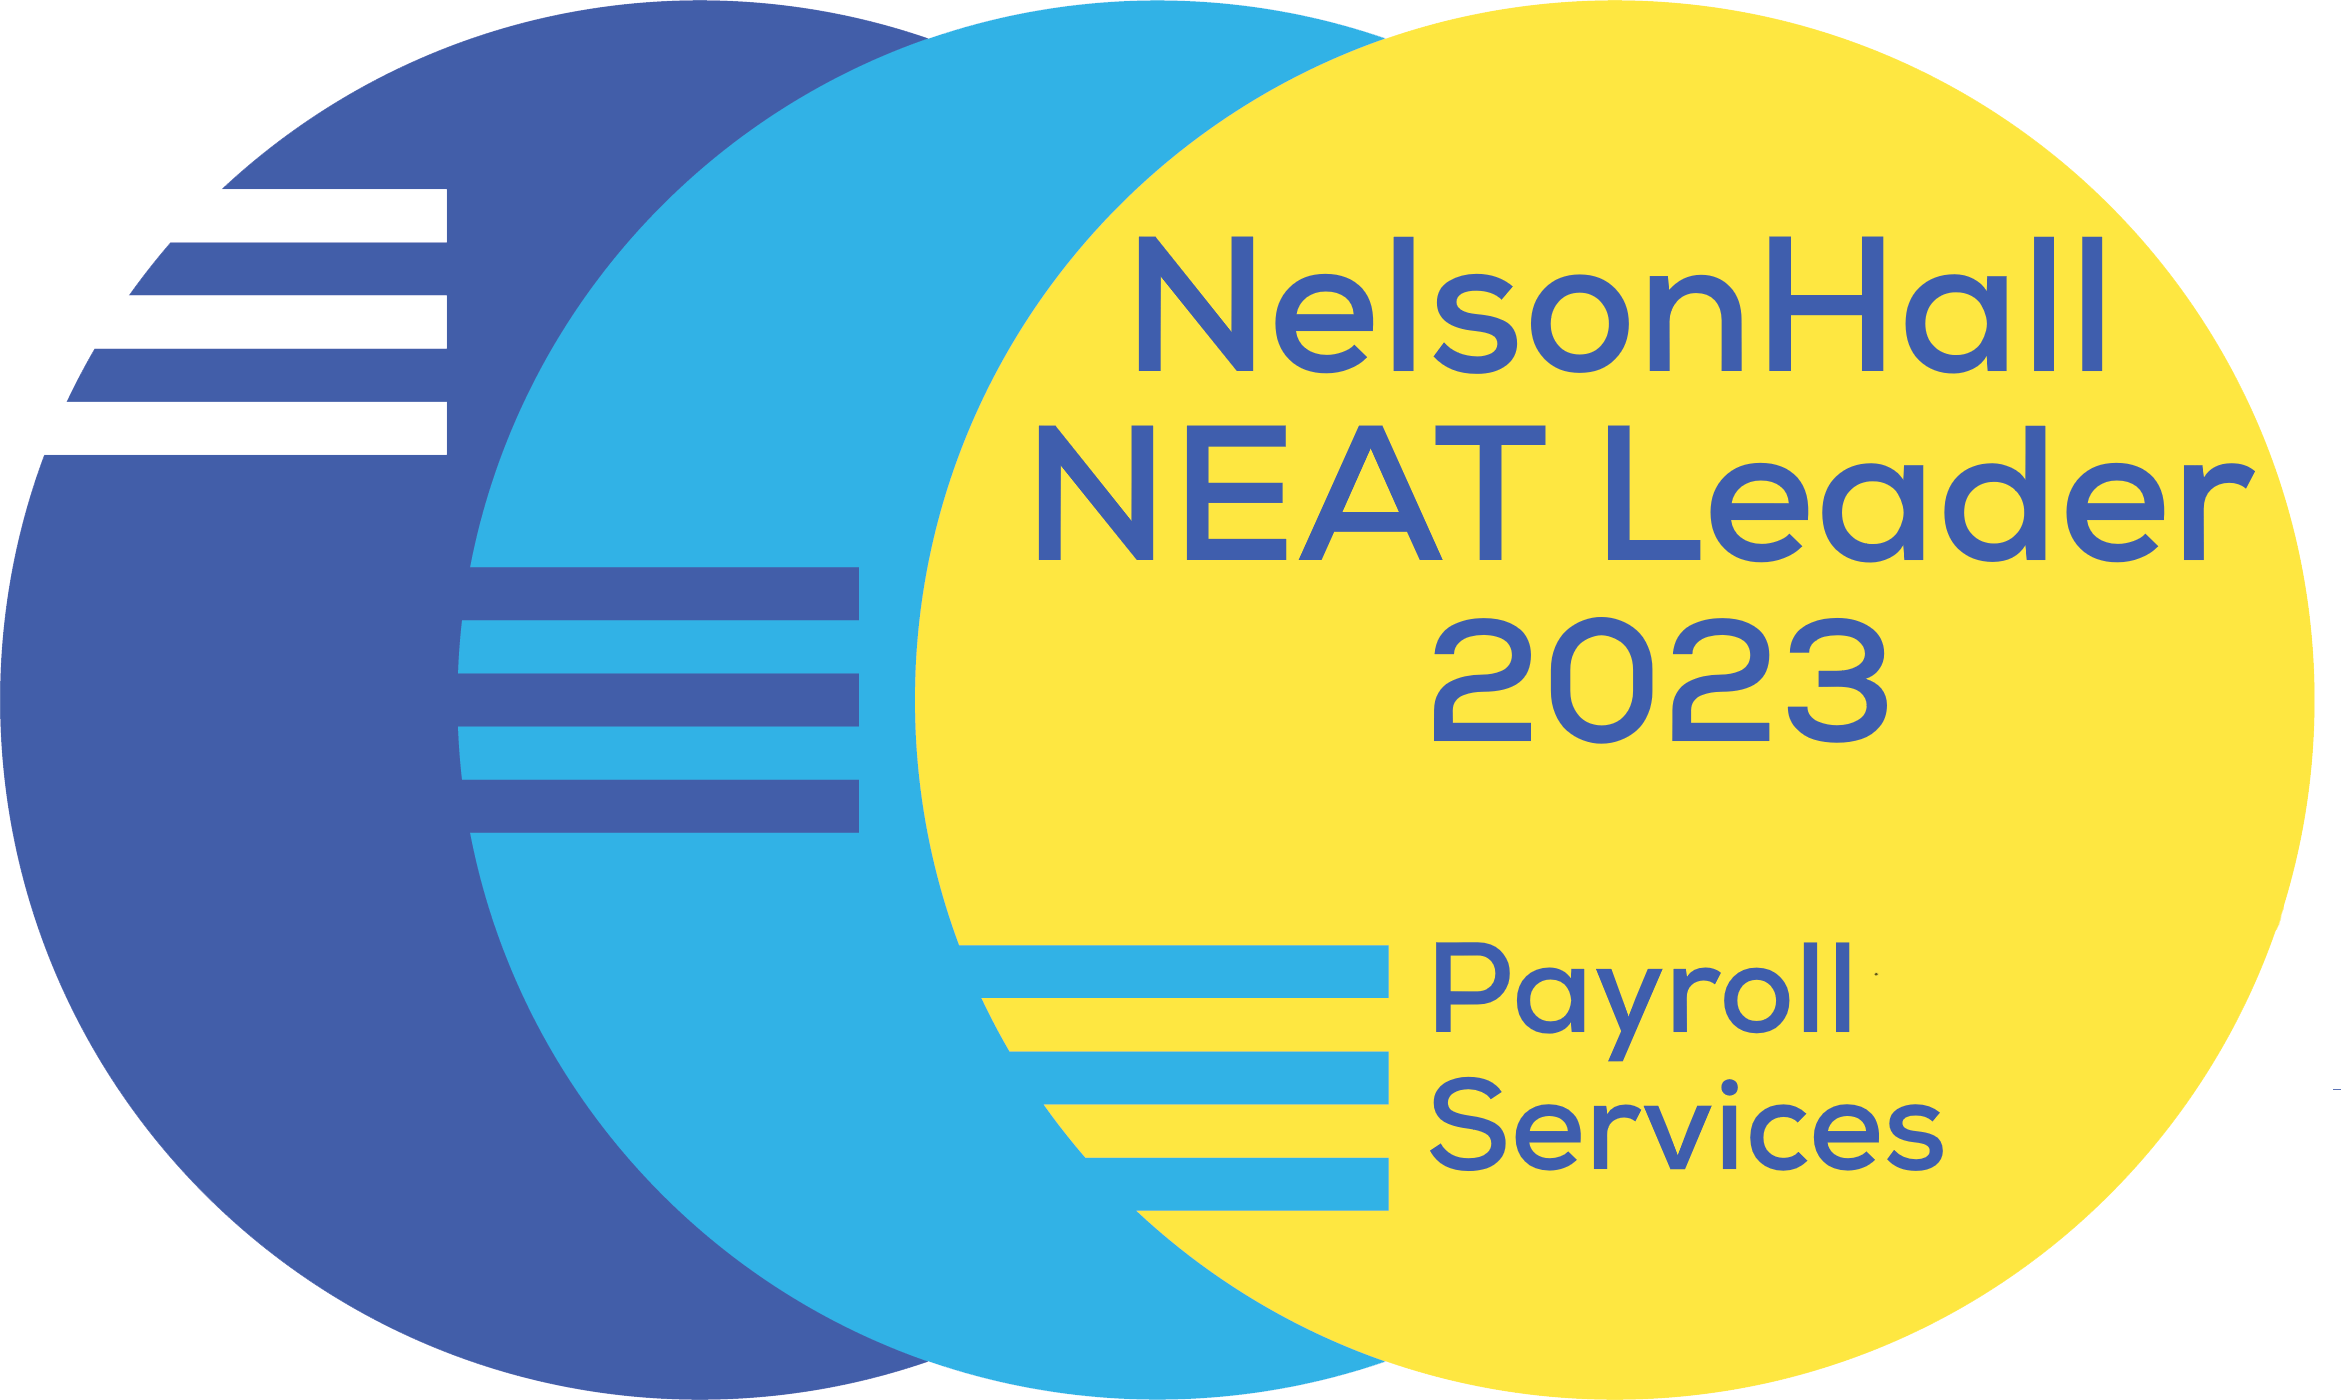 NelsonHall NEAT Leader 2023 logo